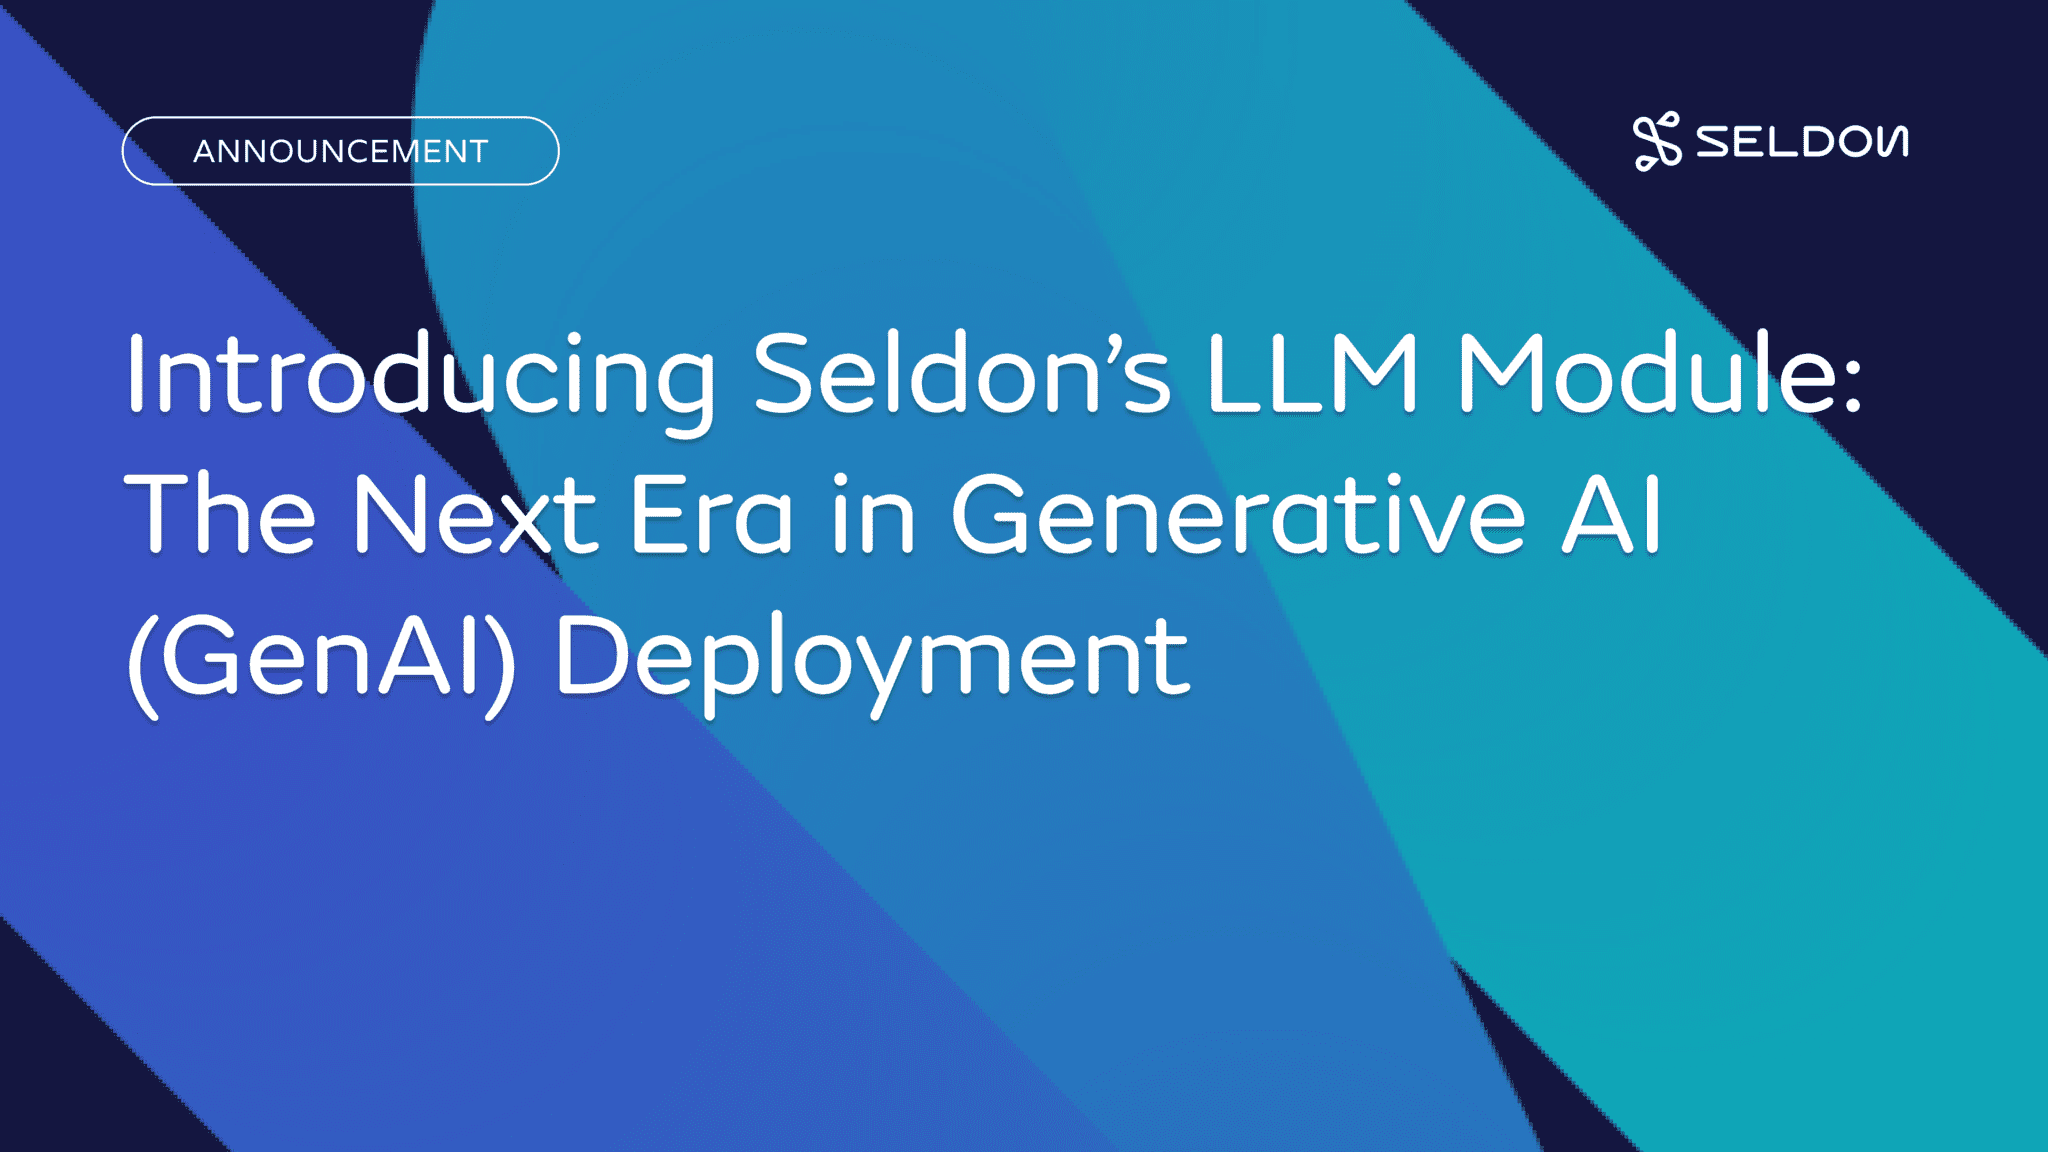 Introducing Seldon’s LLM Module: The Next Era in Generative AI (GenAI) Deployment